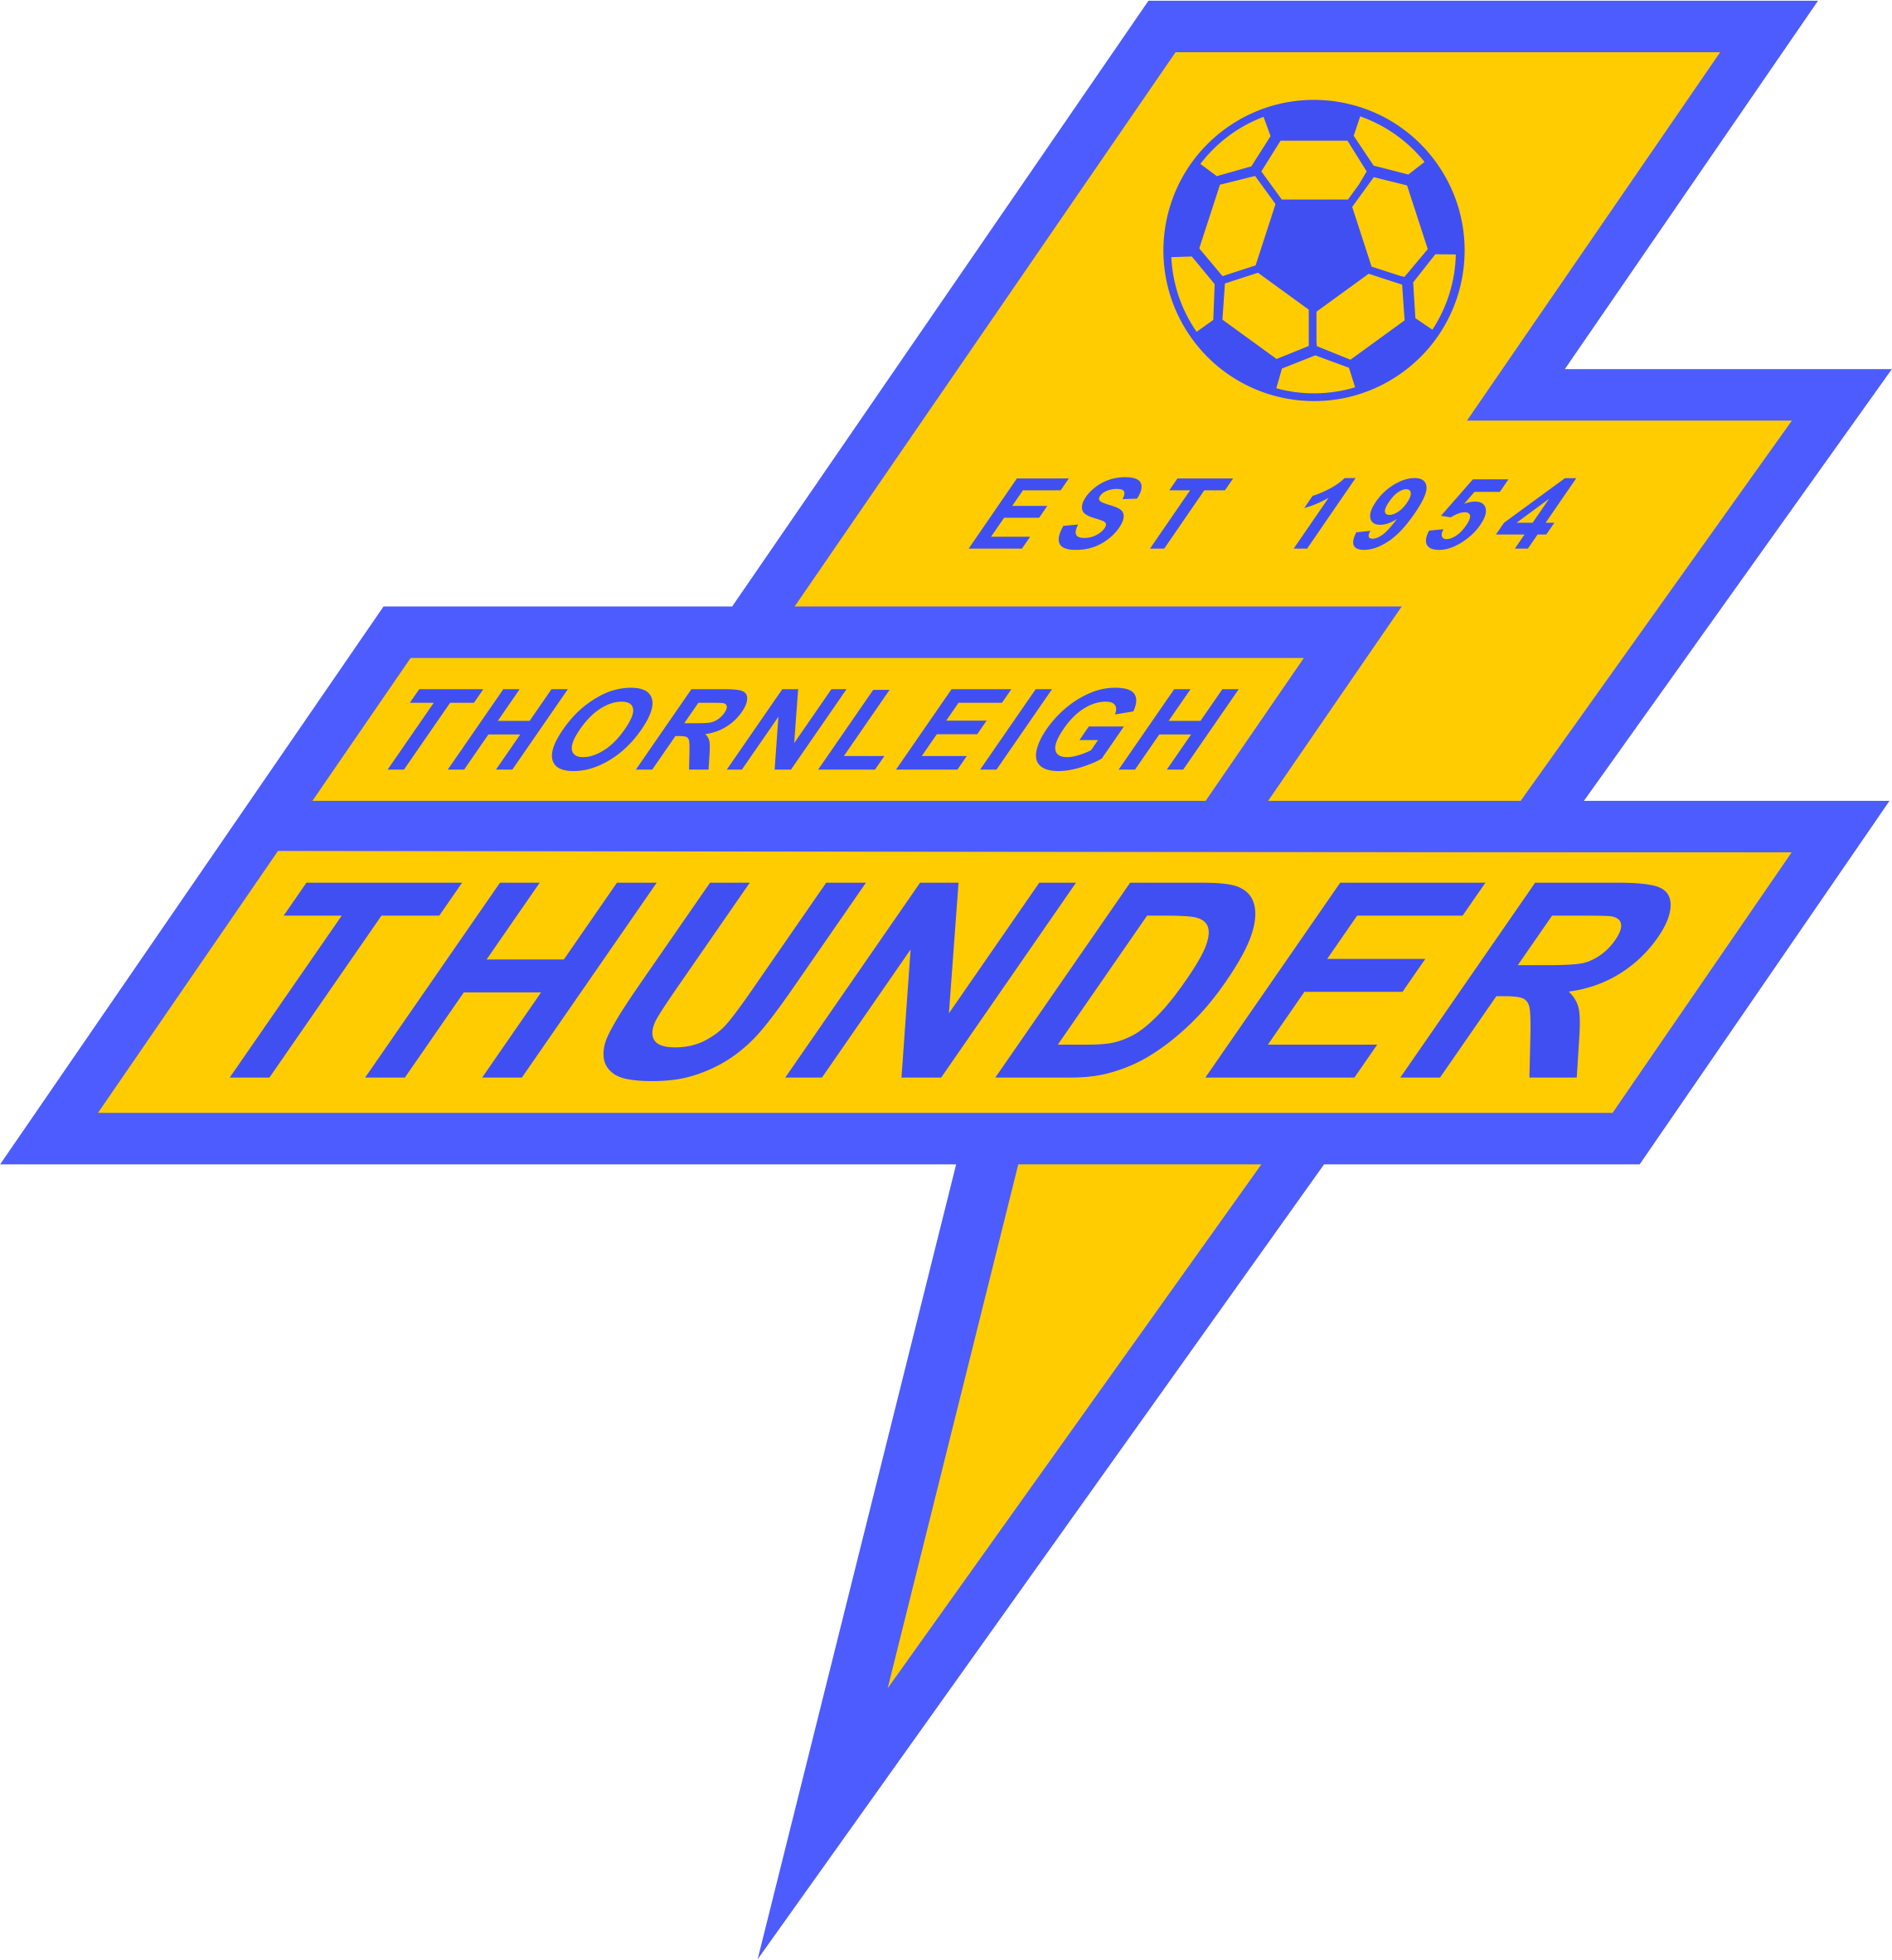 Thornleigh Thunder FC